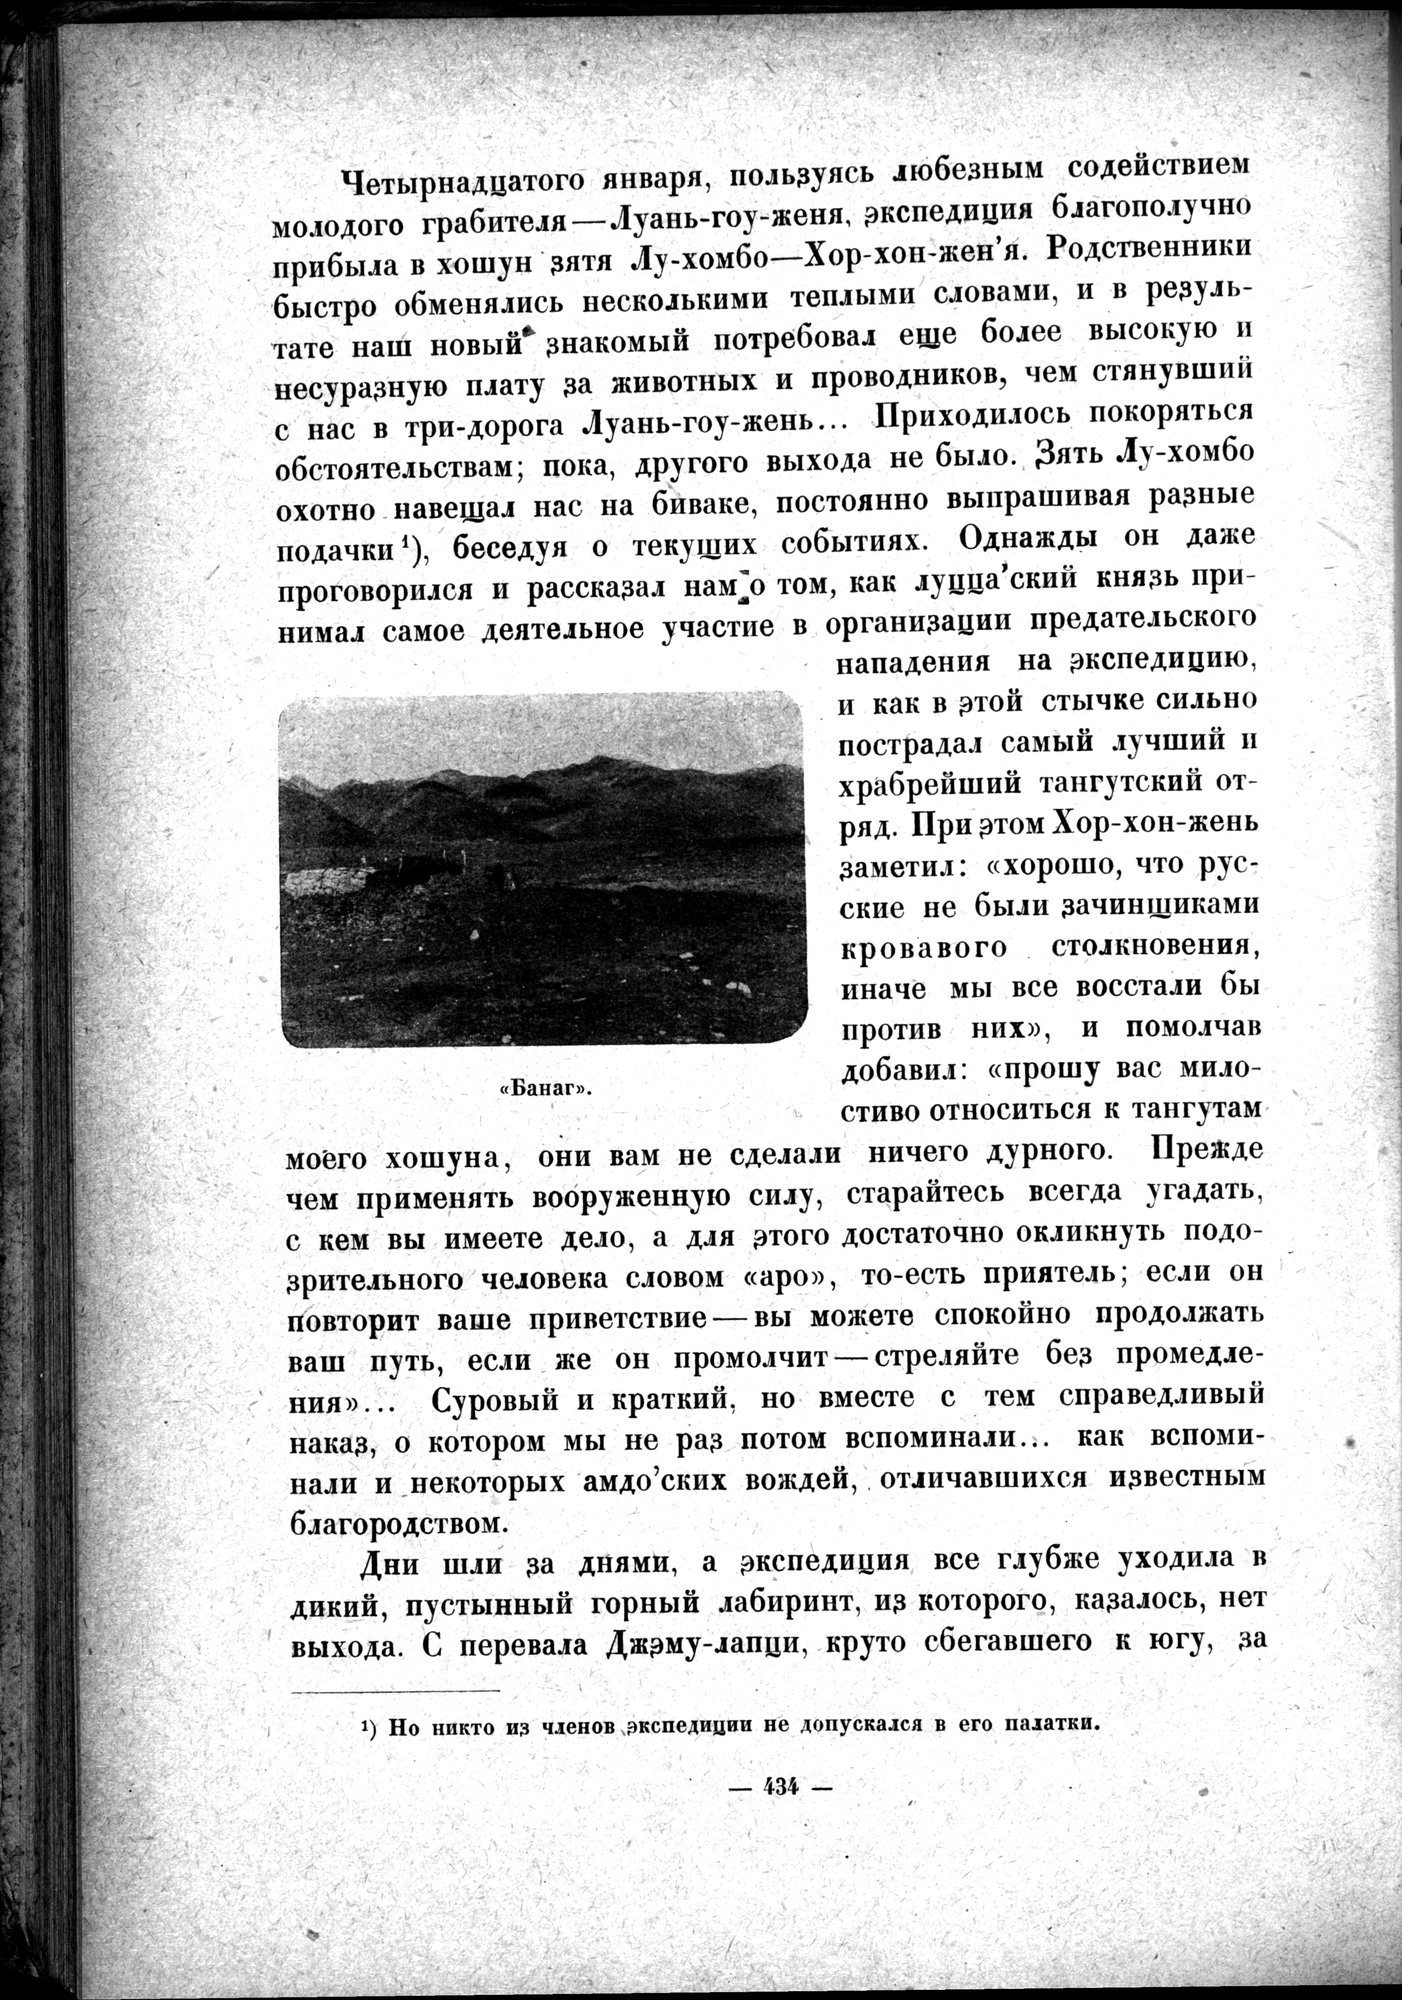 Mongoliya i Amdo i mertby gorod Khara-Khoto : vol.1 / Page 496 (Grayscale High Resolution Image)